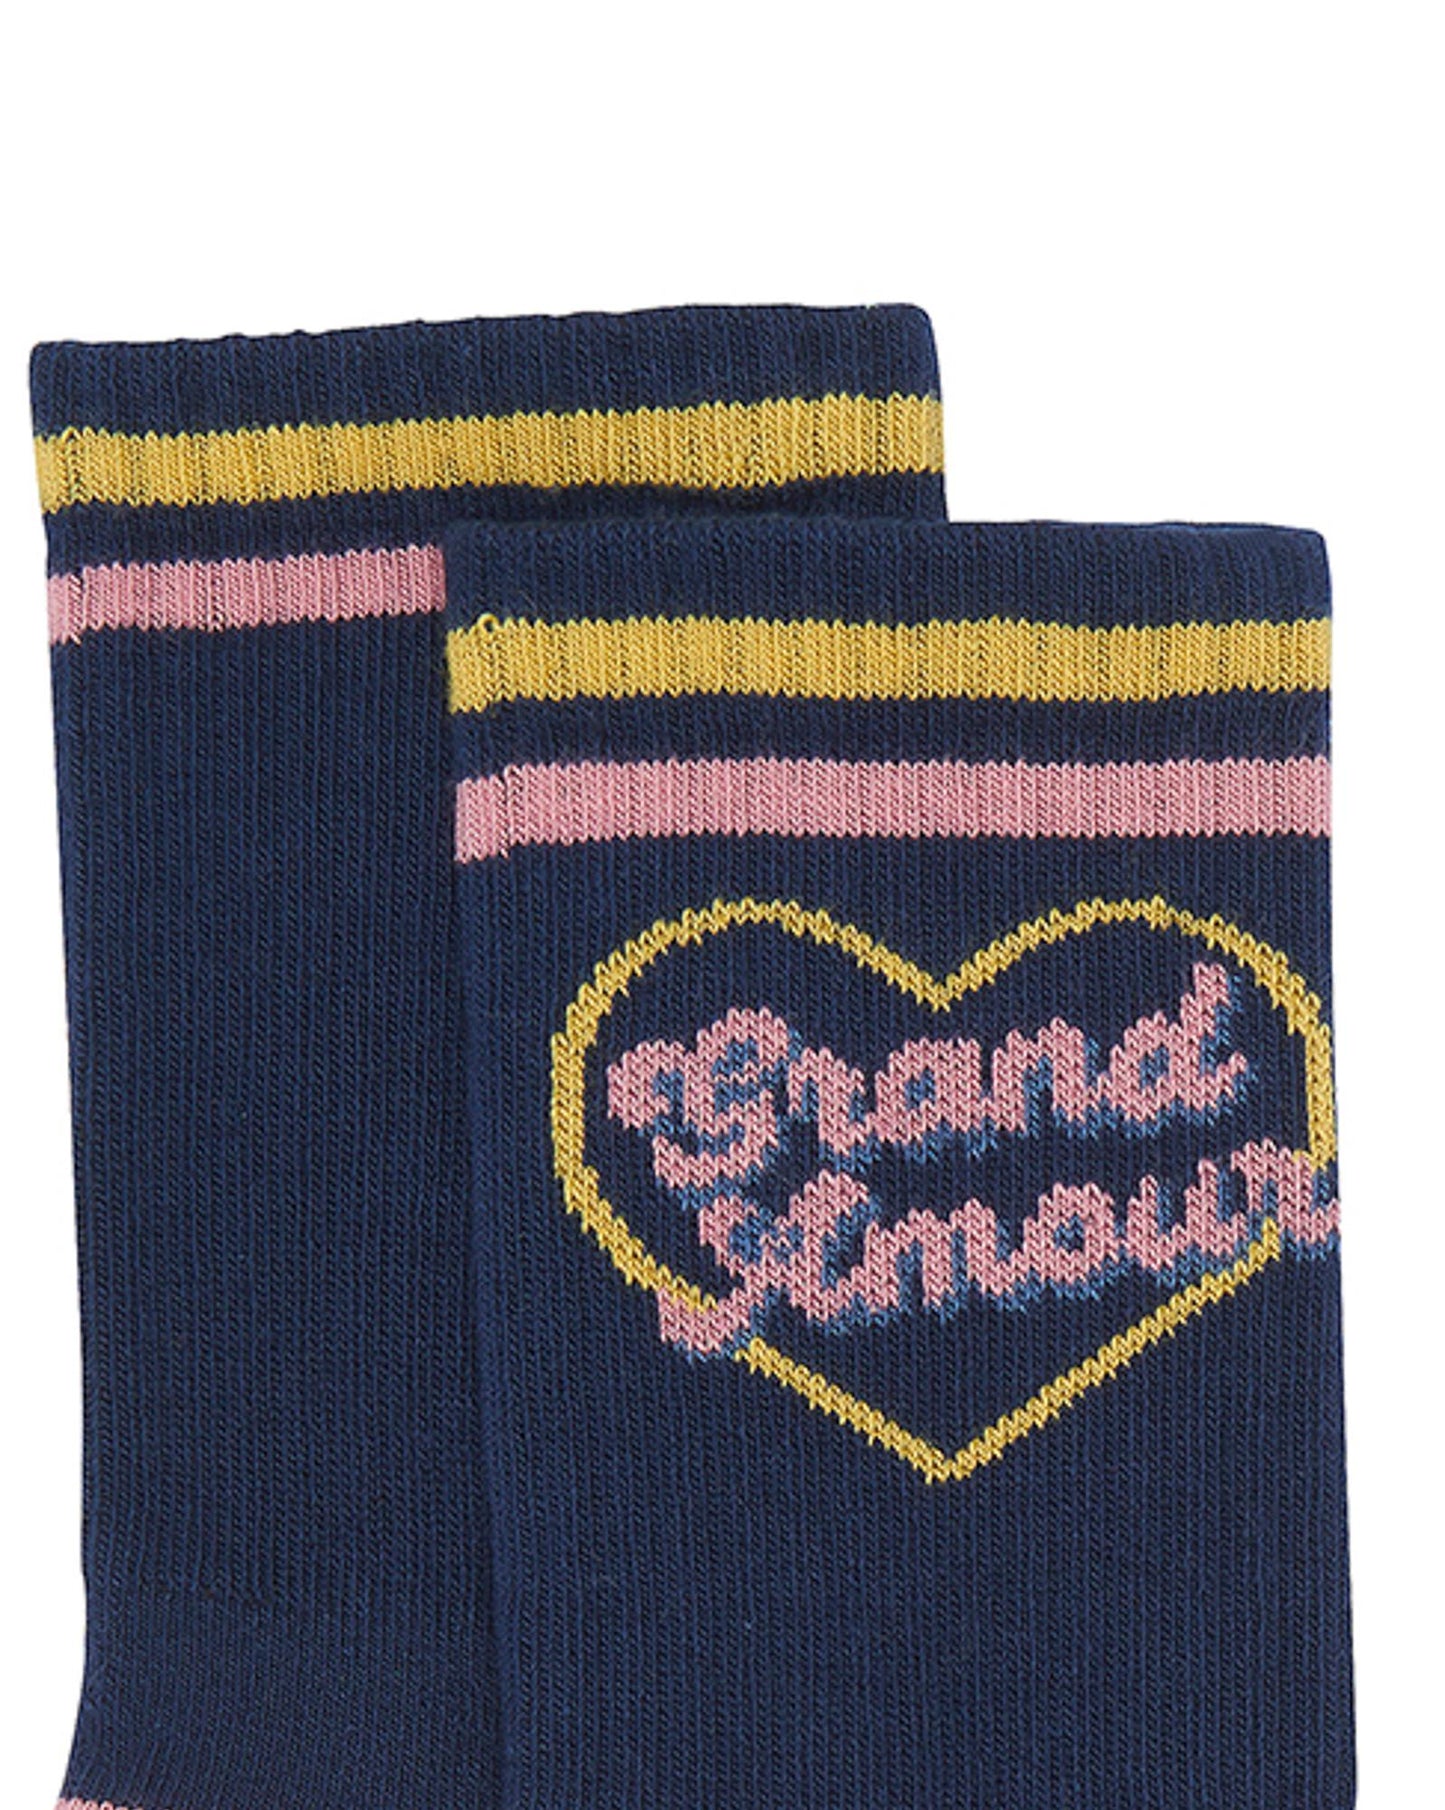 Sock - Grandamour Duo Blue jacquard knitting